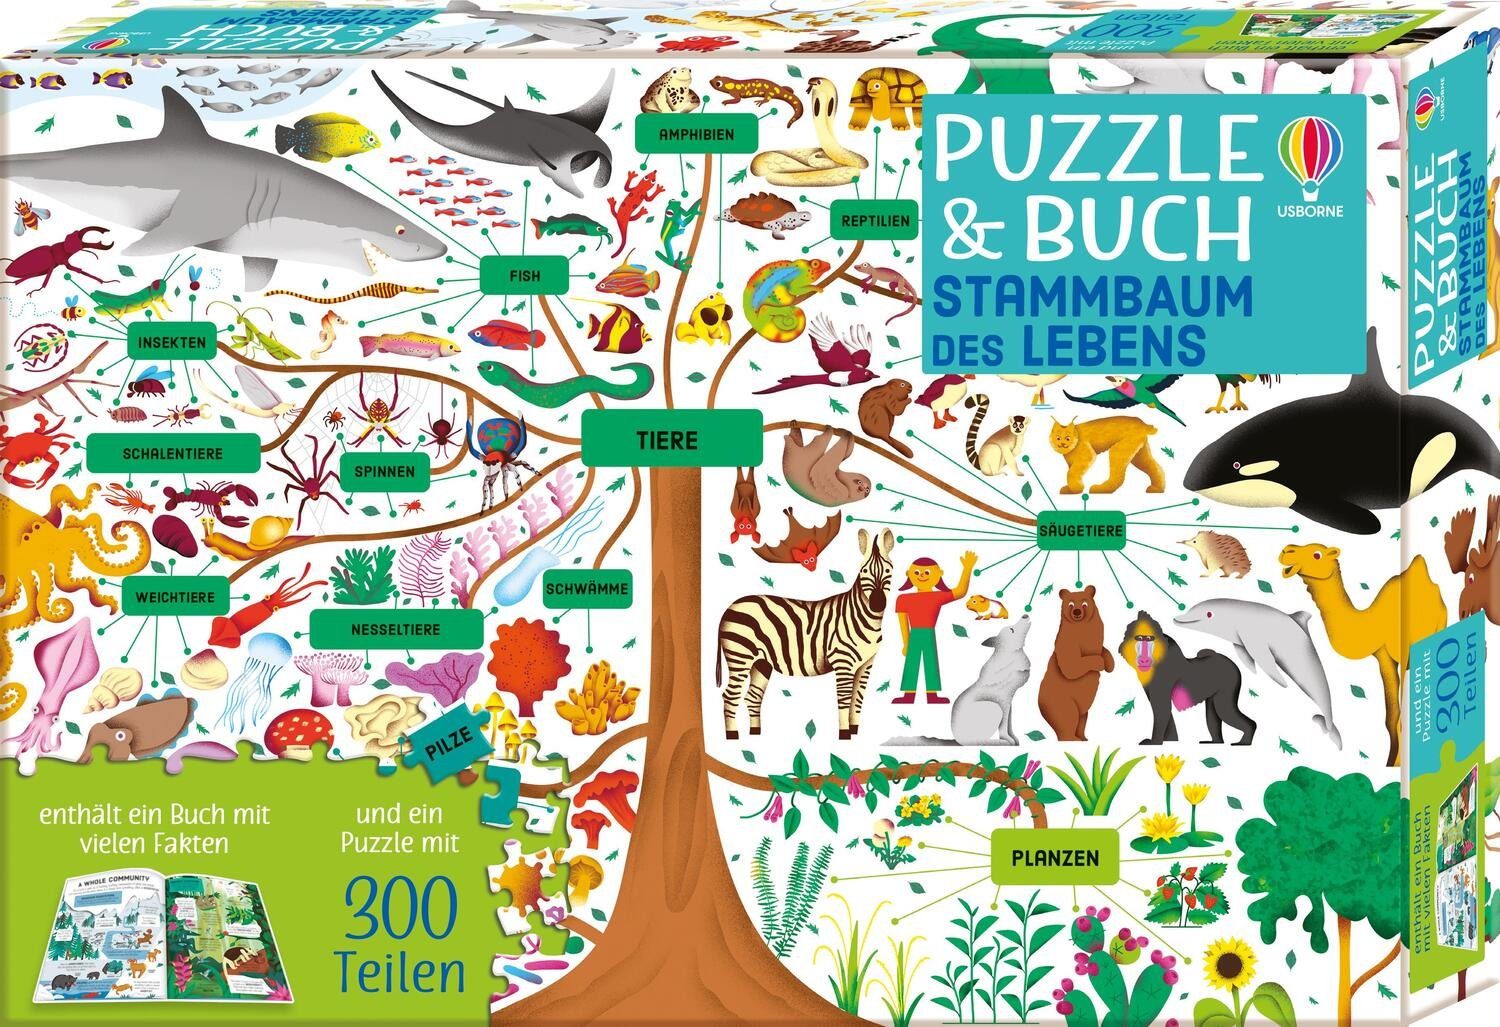 & Verlag Buch: Puzzle Stammbaum 300 des Usborne Lebens, Puzzle Puzzleteile